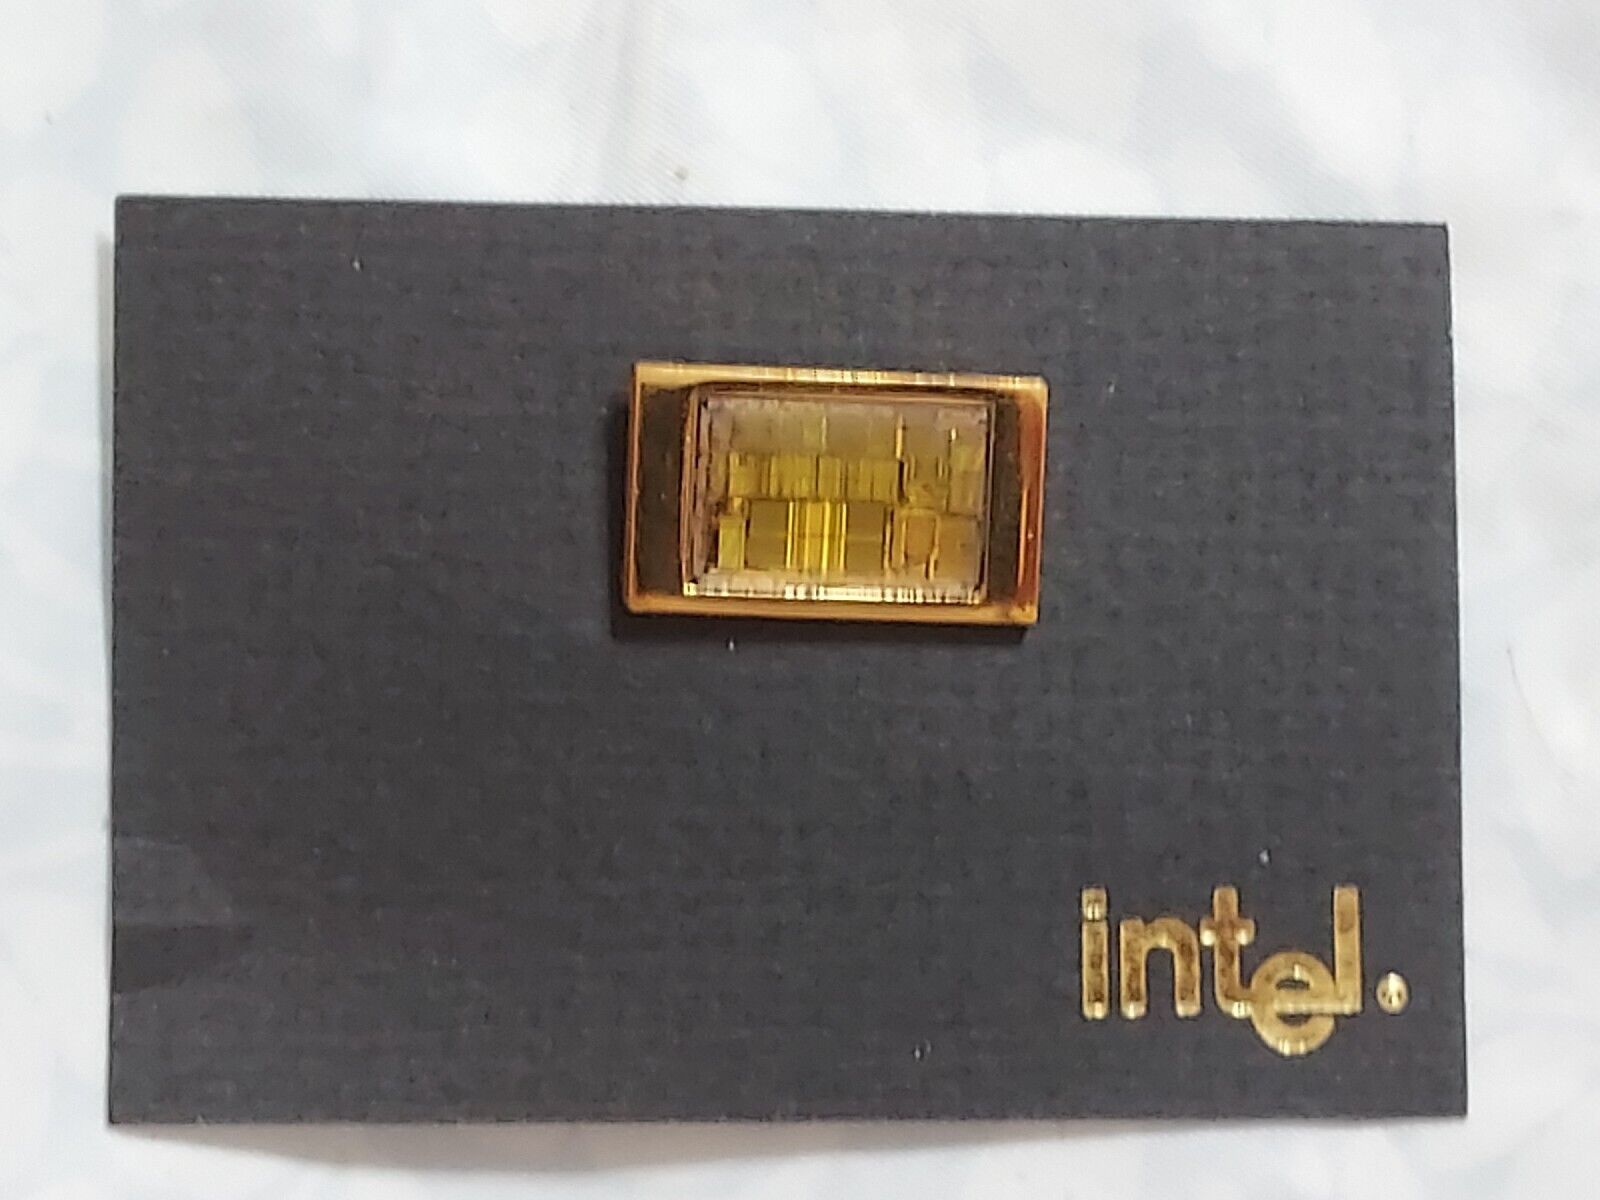 RARE Intel i486 Processor Chip Jewelry Gold tone Promotional LAPEL PIN Vintage 